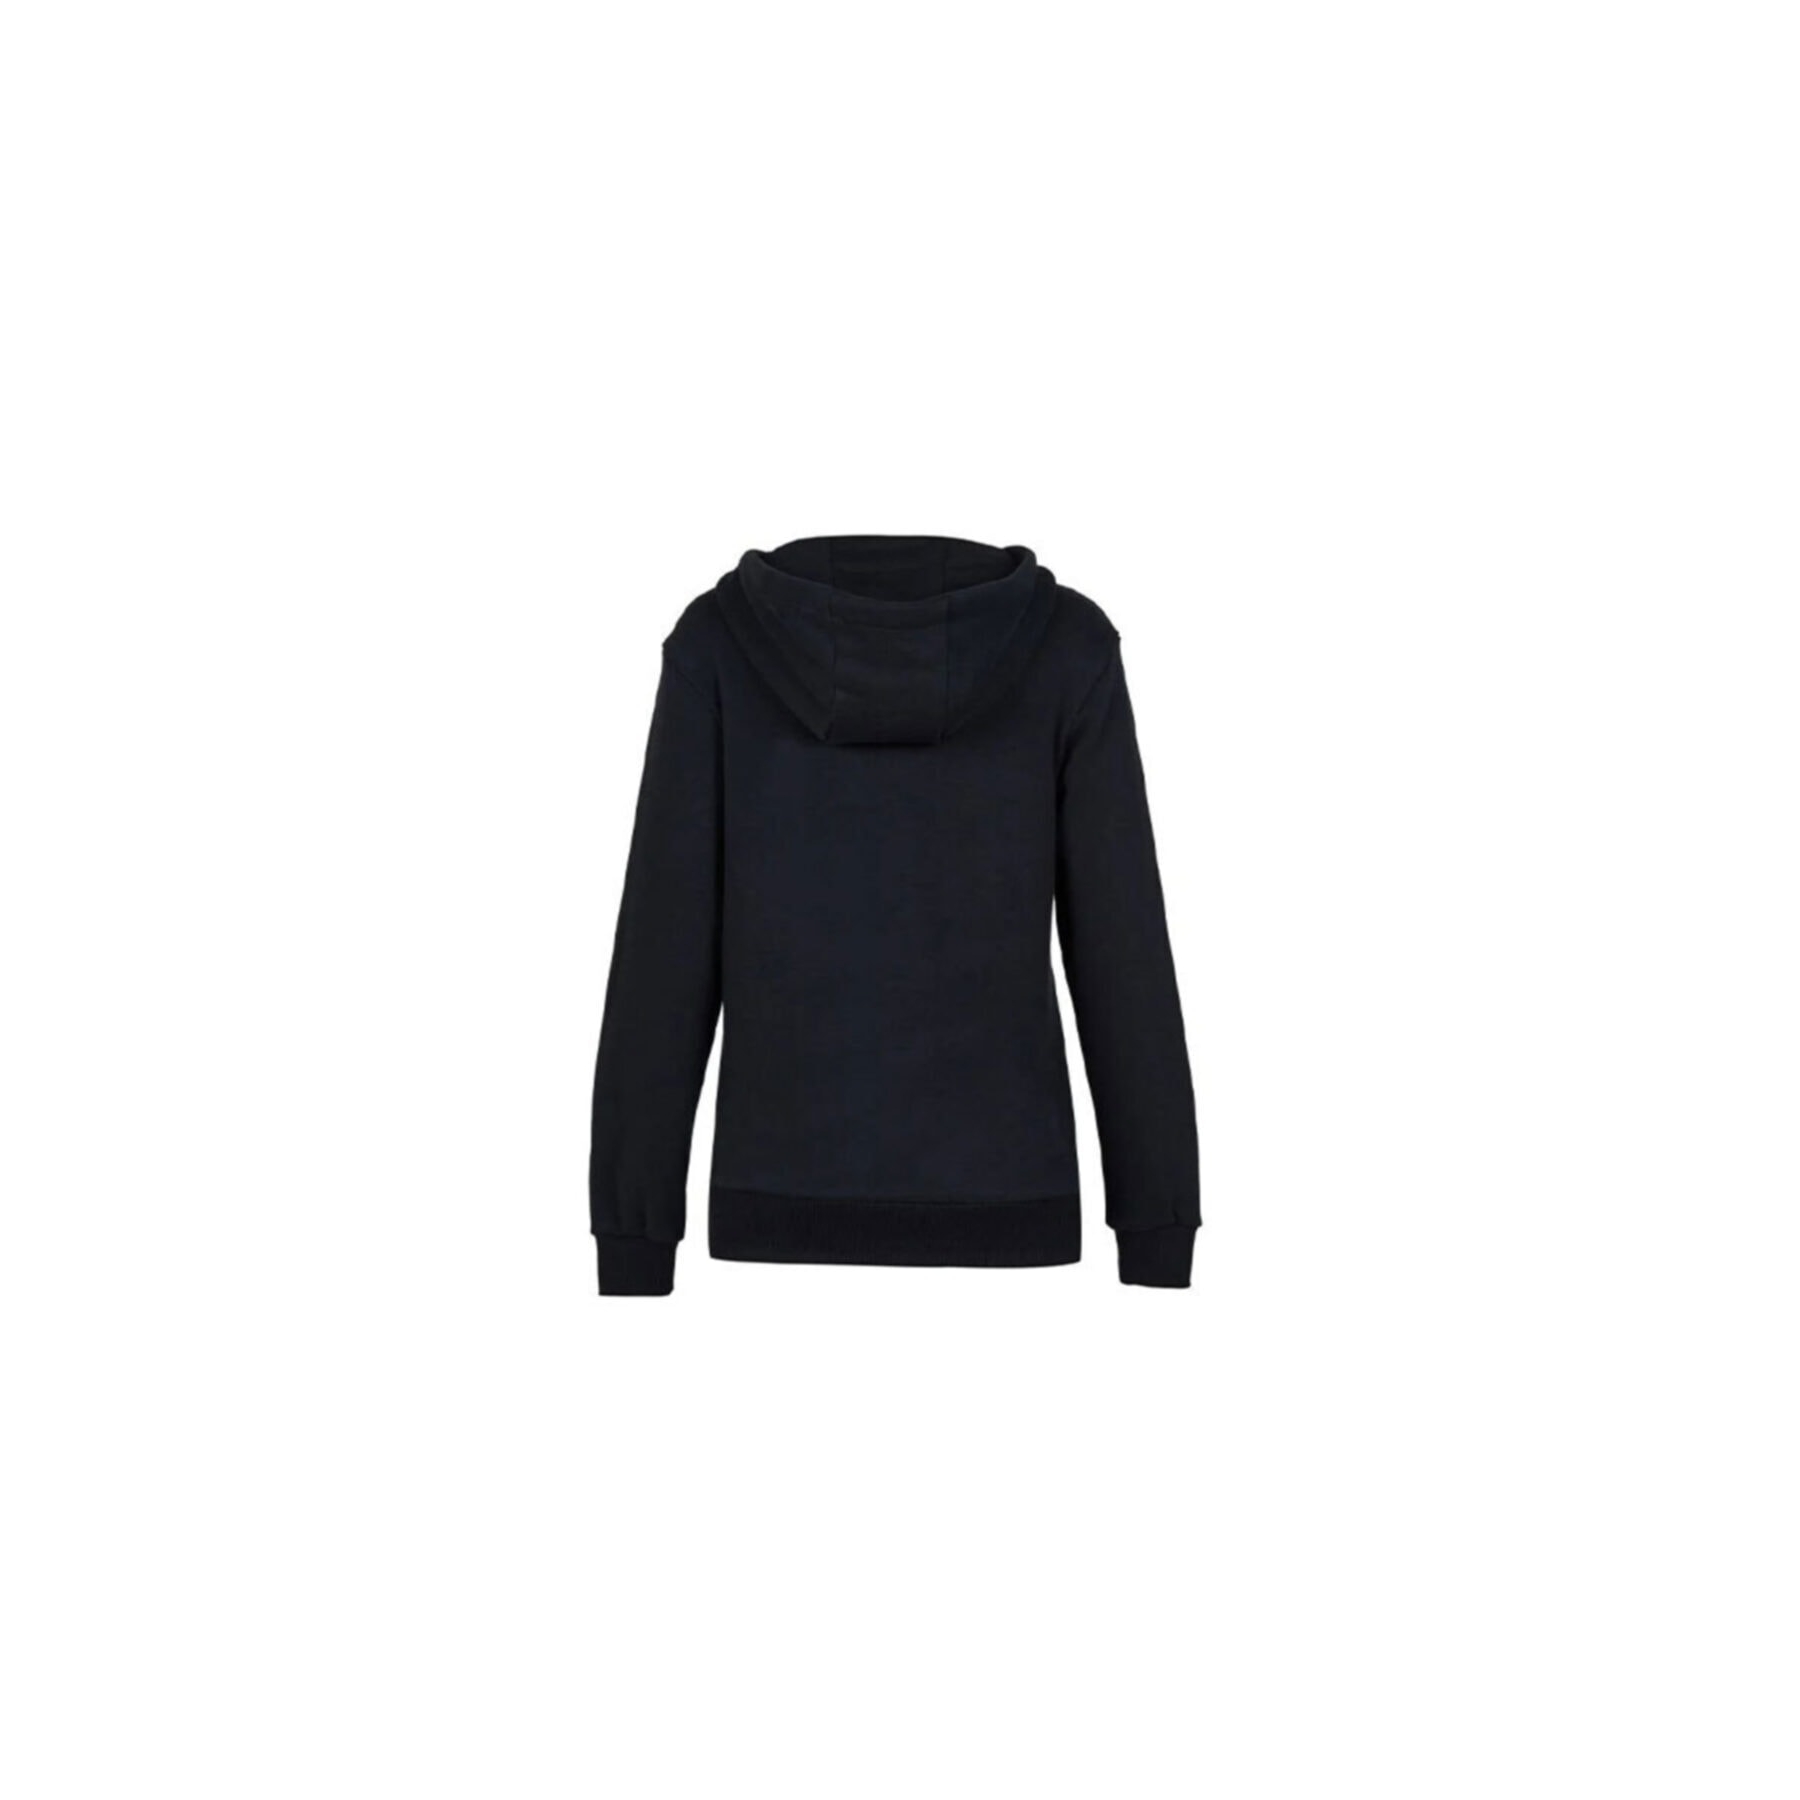 New Balance Siyah Kapüşonlu Sweatshirt (WPH3107-BK)